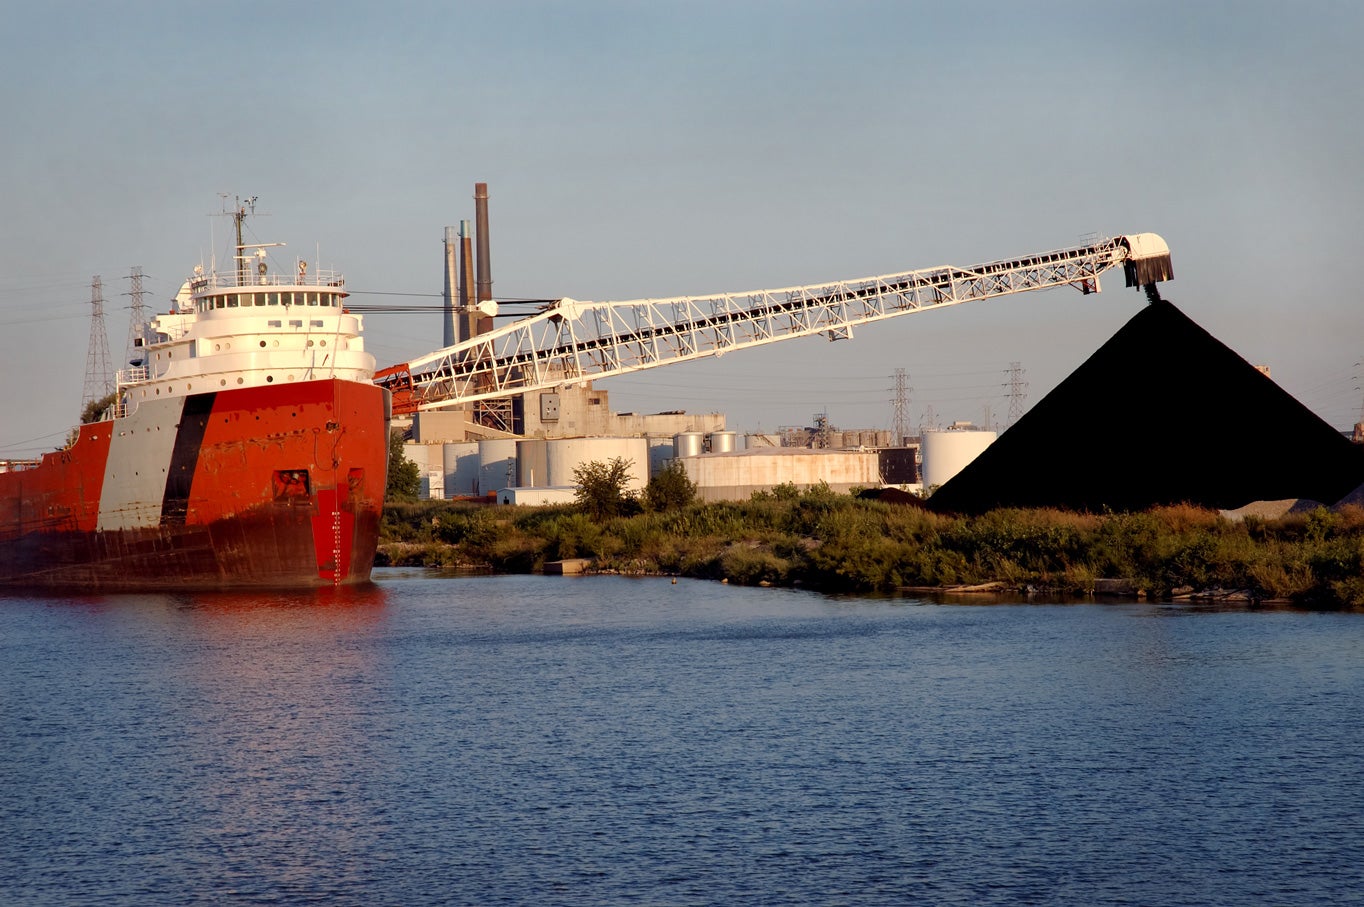 A coal ship unloads near the water.